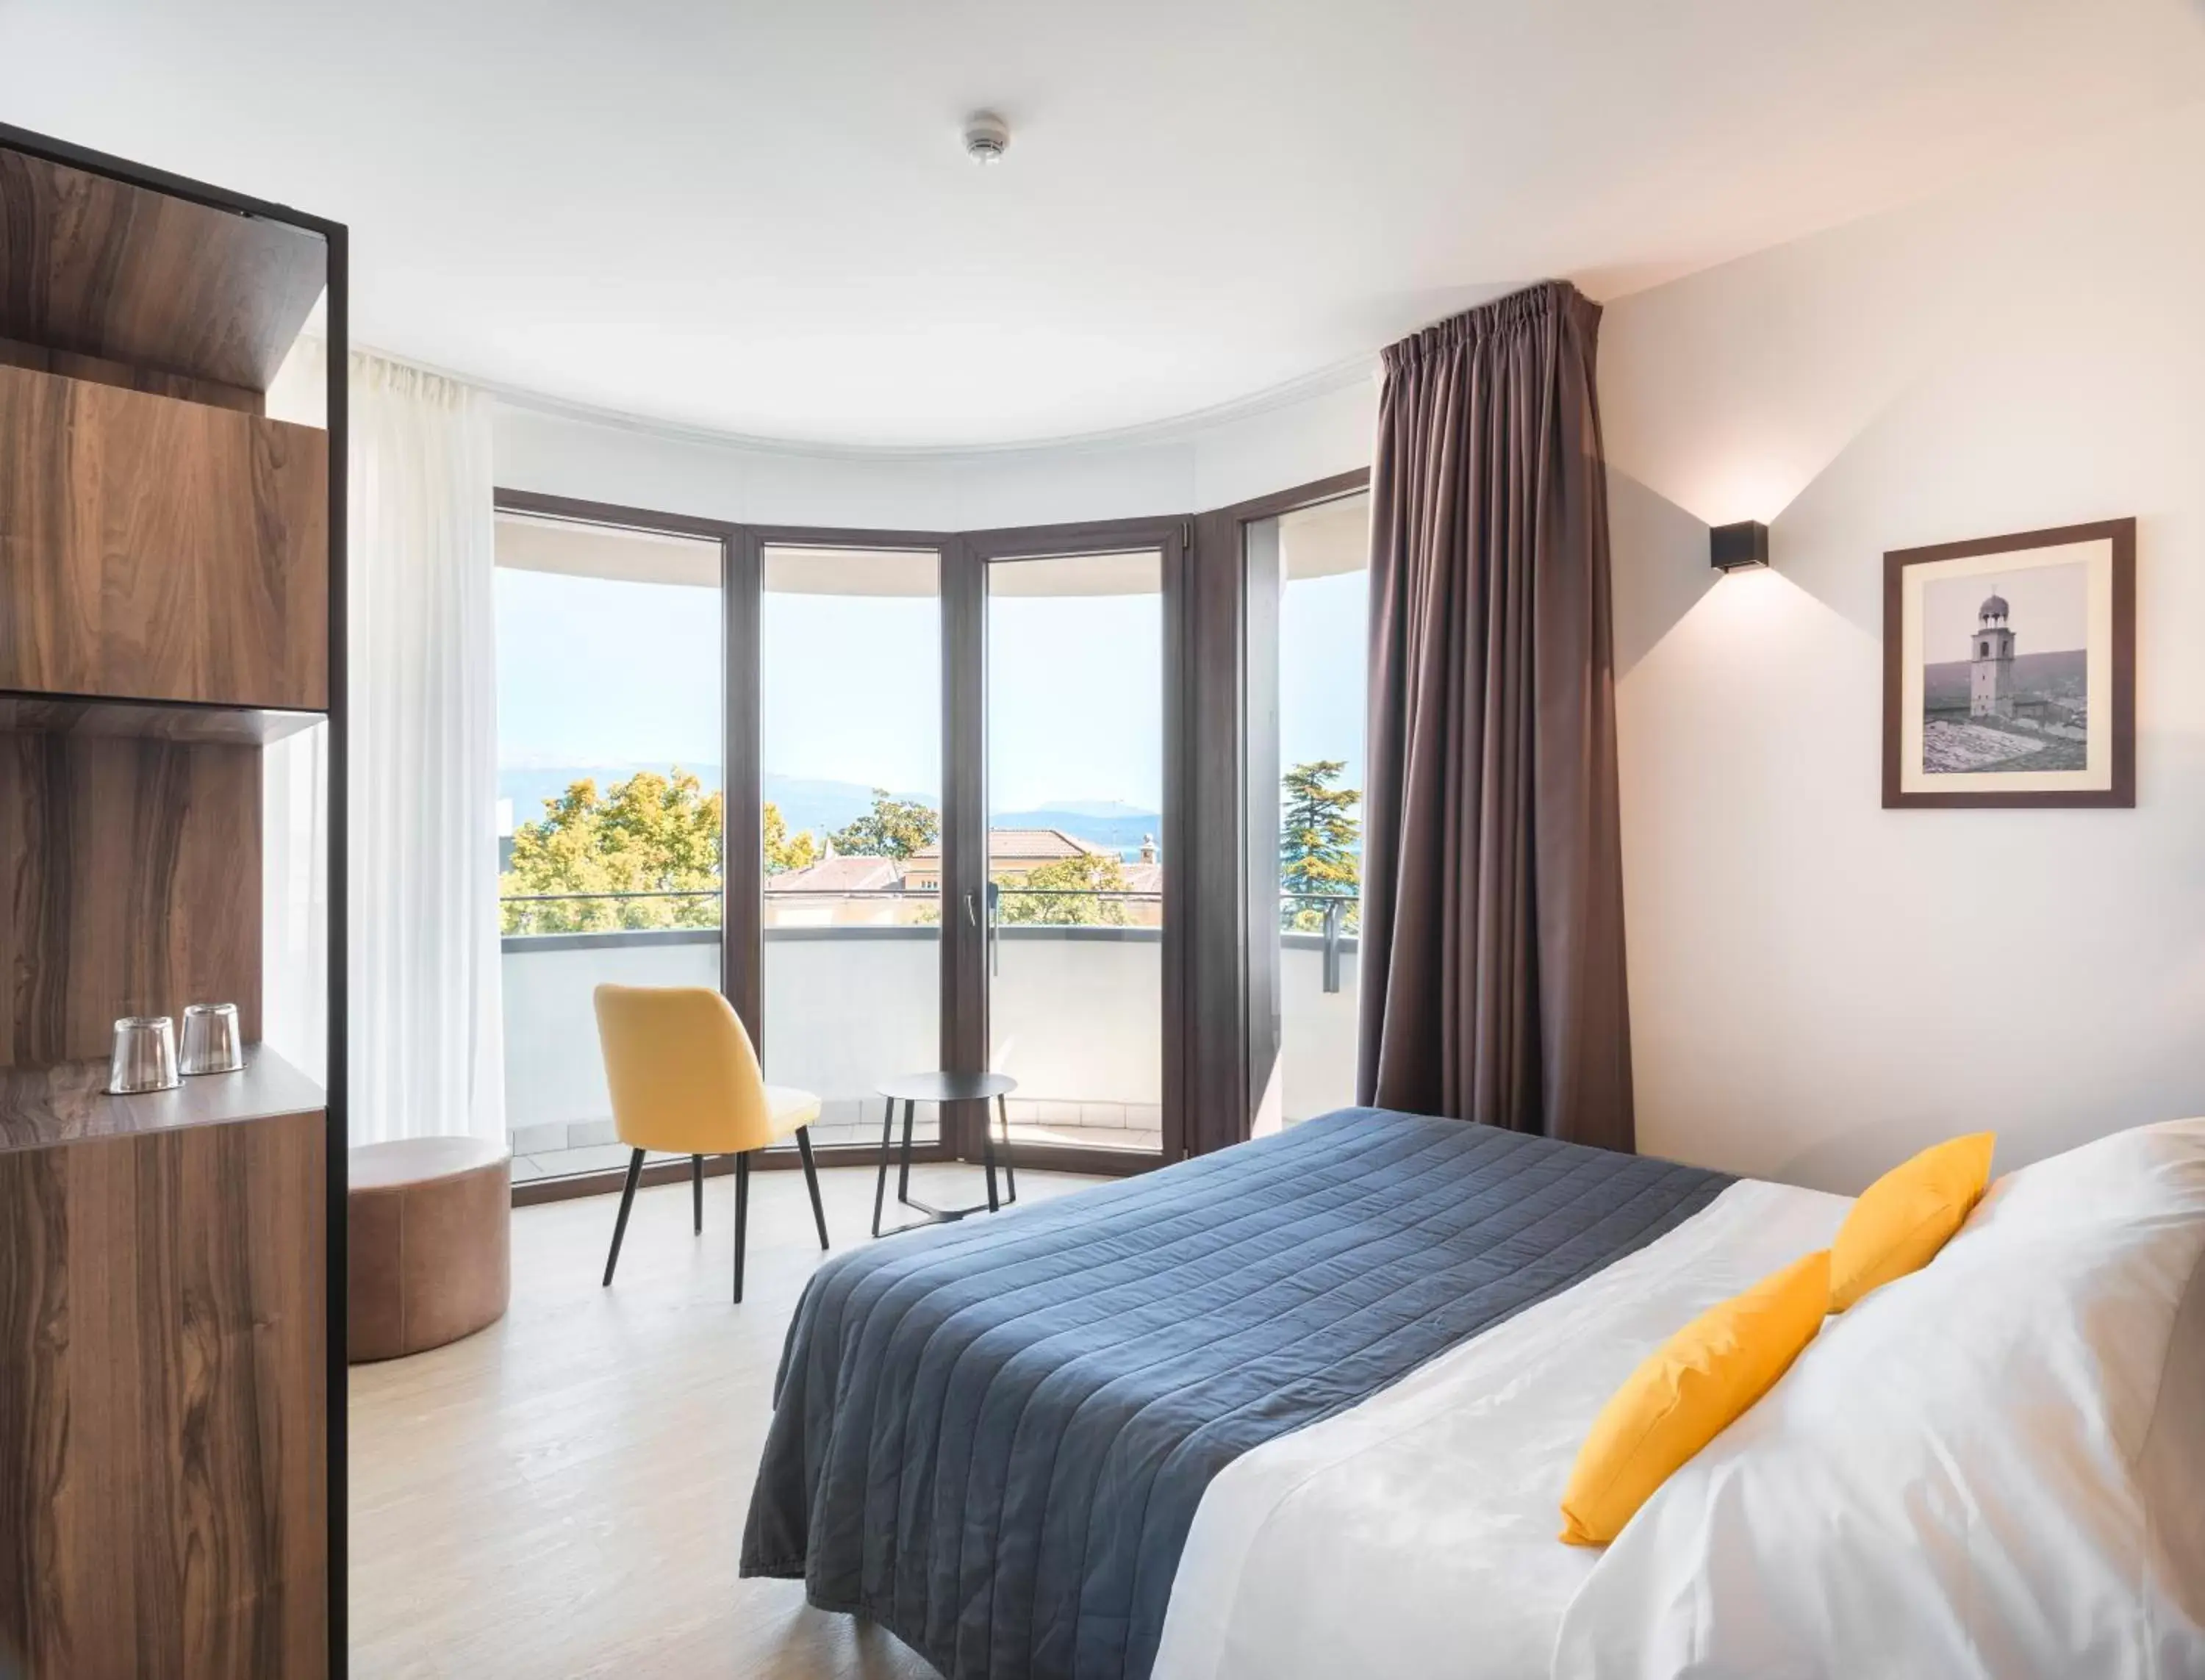 Bedroom in Rivalta Life Style Hotel